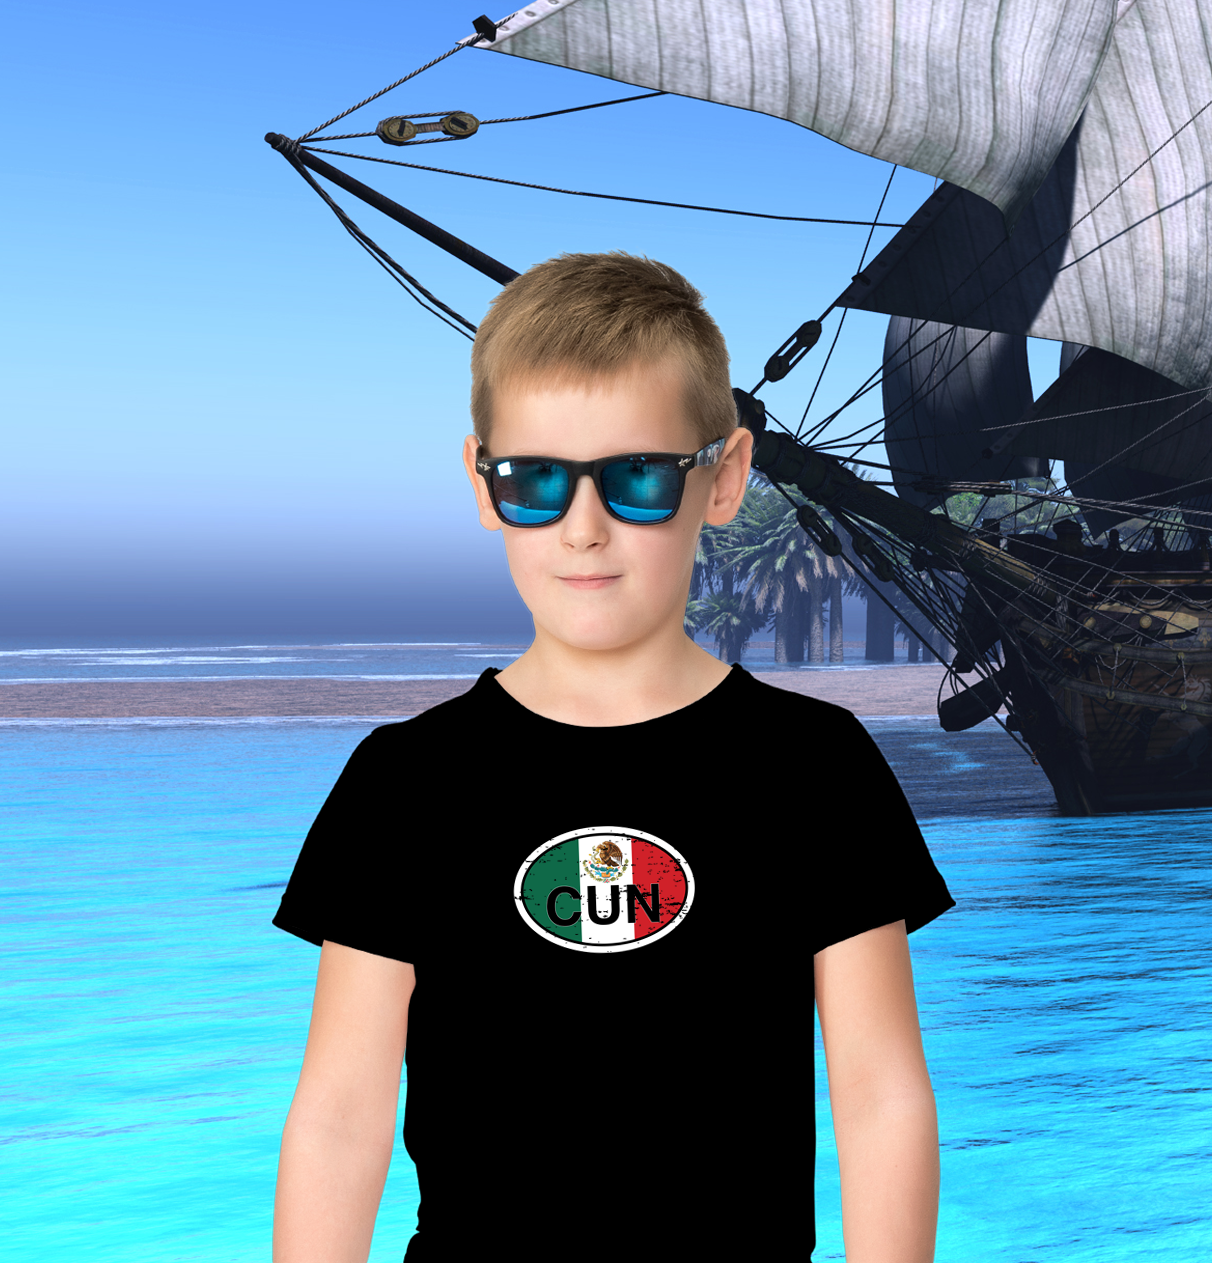 Cancun Flag Youth T-Shirt - My Destination Location